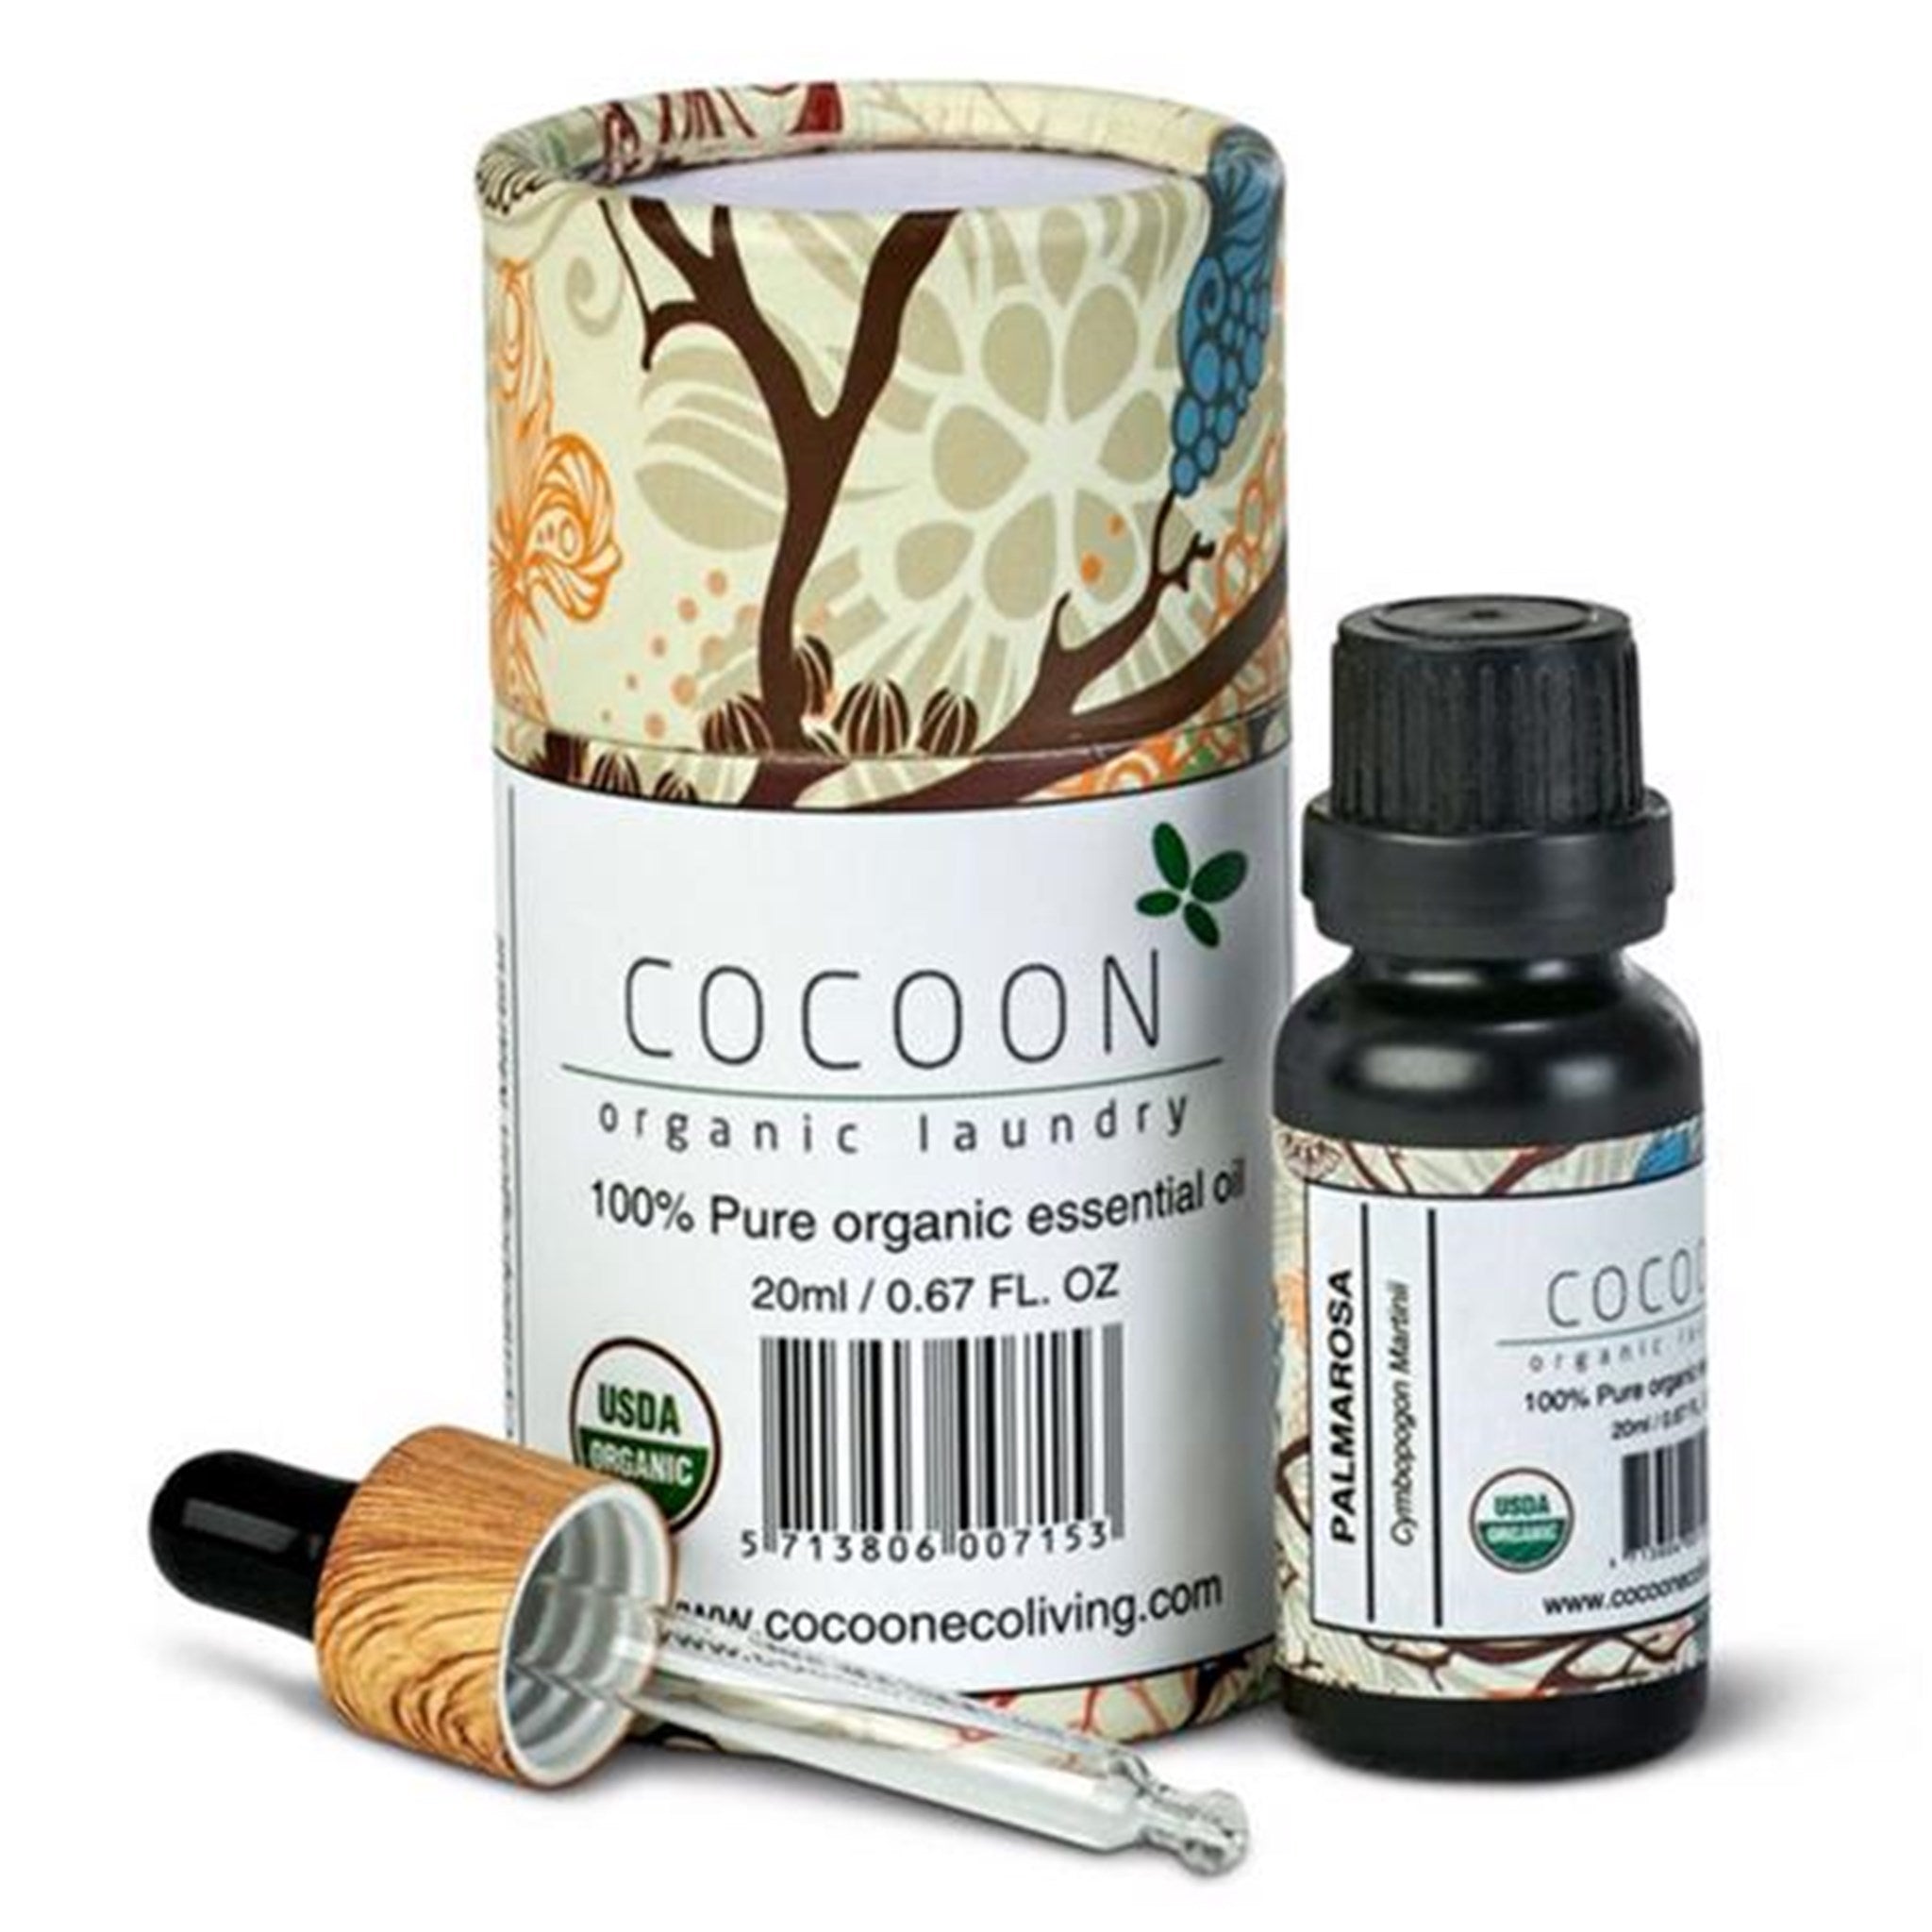 Cocoon Organic Laundry Palmrose Oil 20 ml.